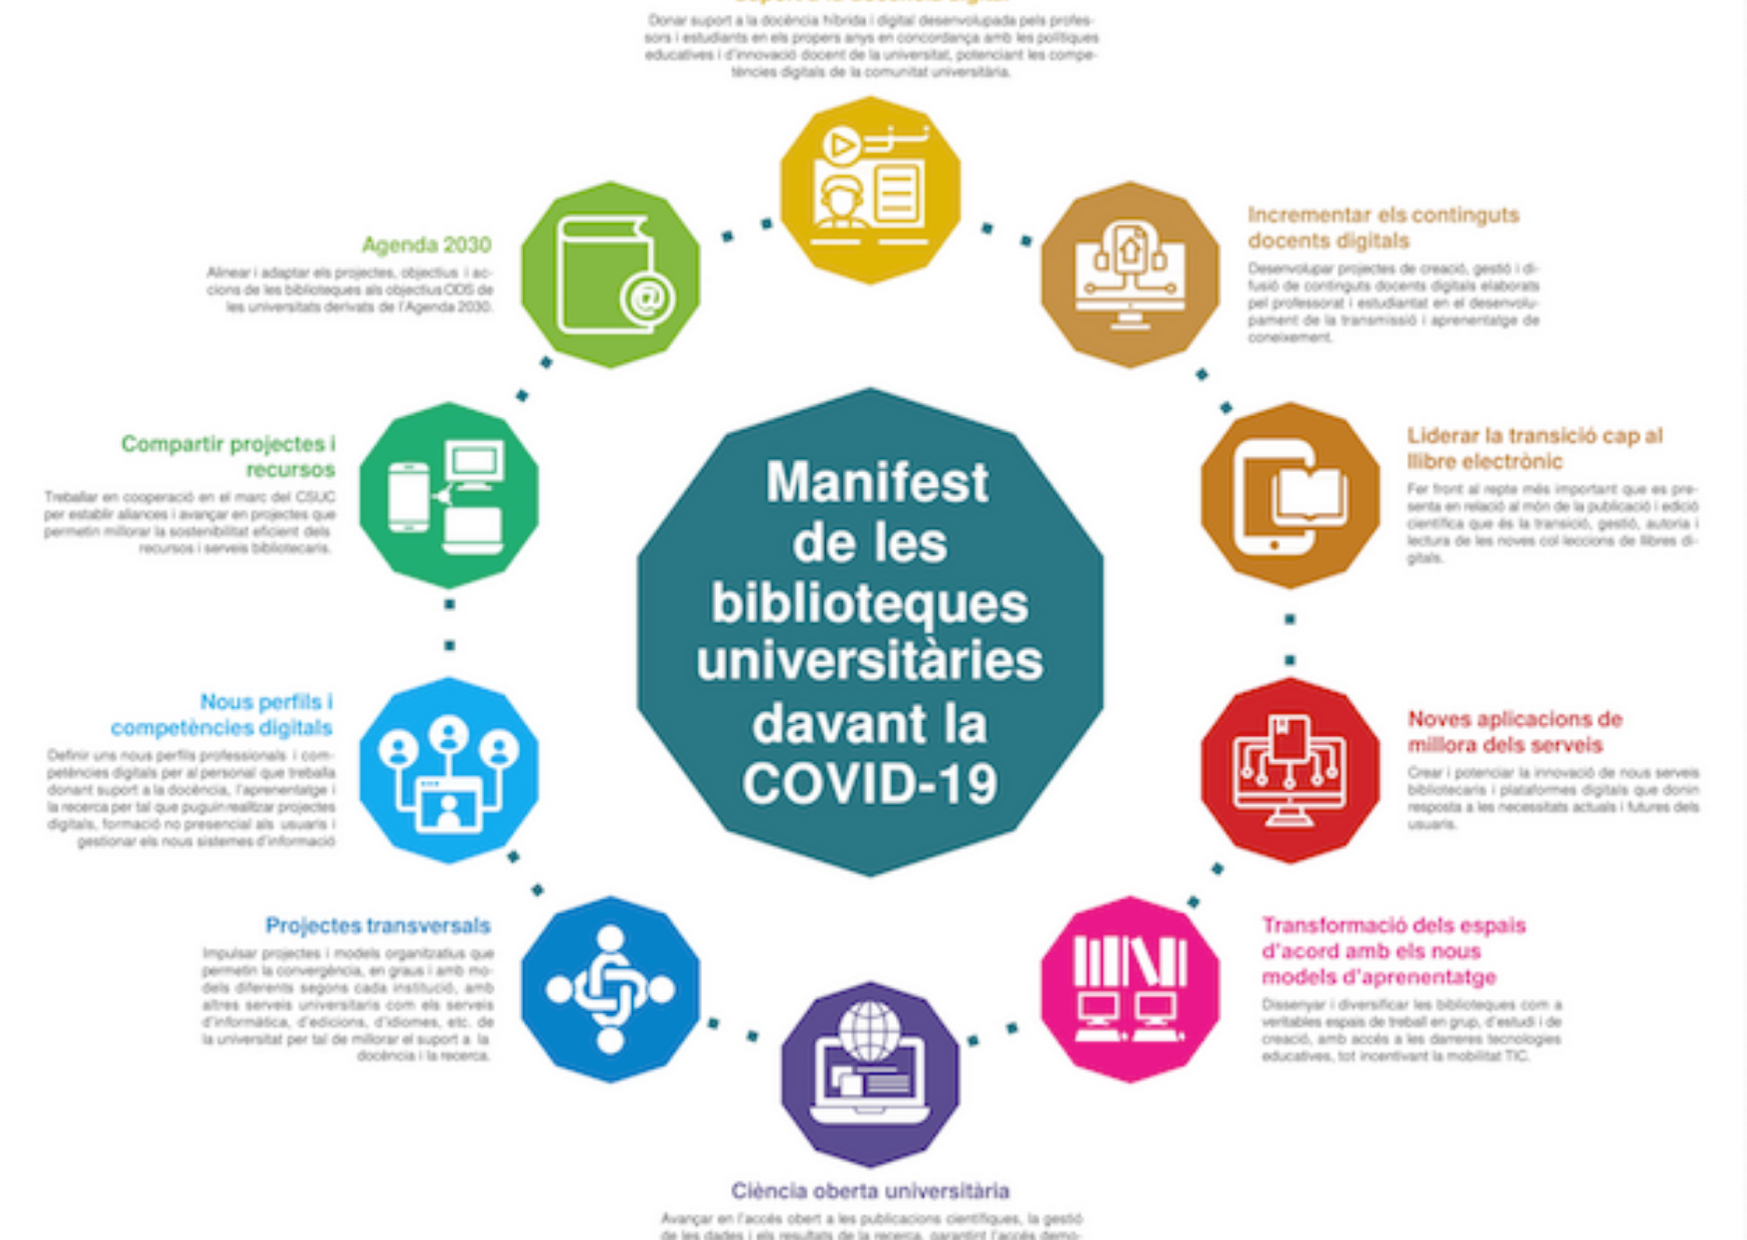 Manifest de les biblioteques universitàries davant la COVID-19